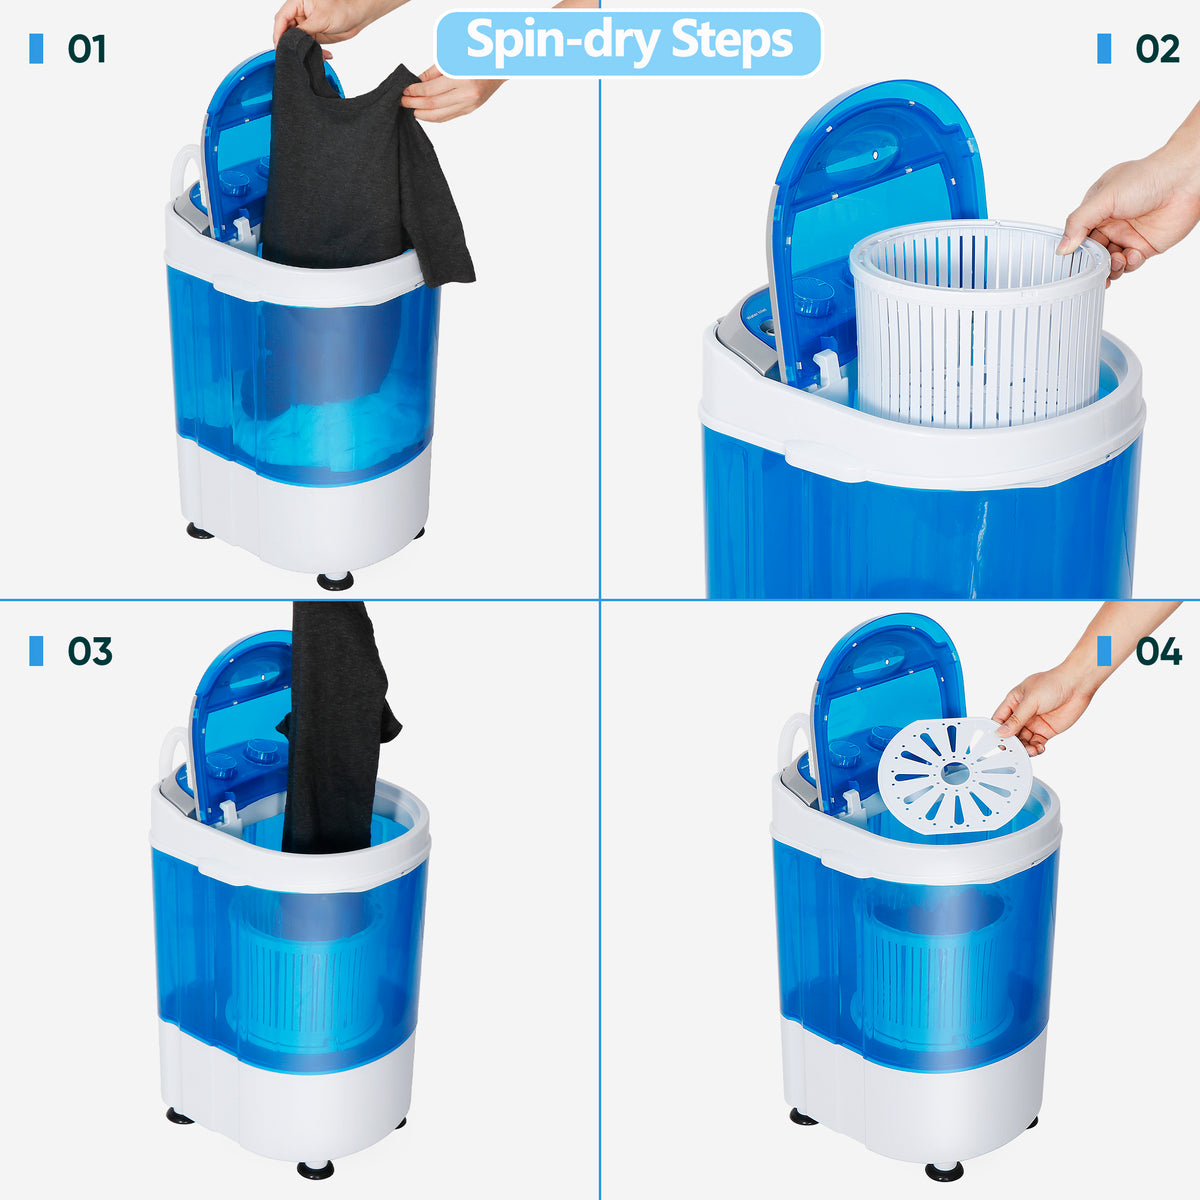 ZENY Portable Washing Machine User Manual